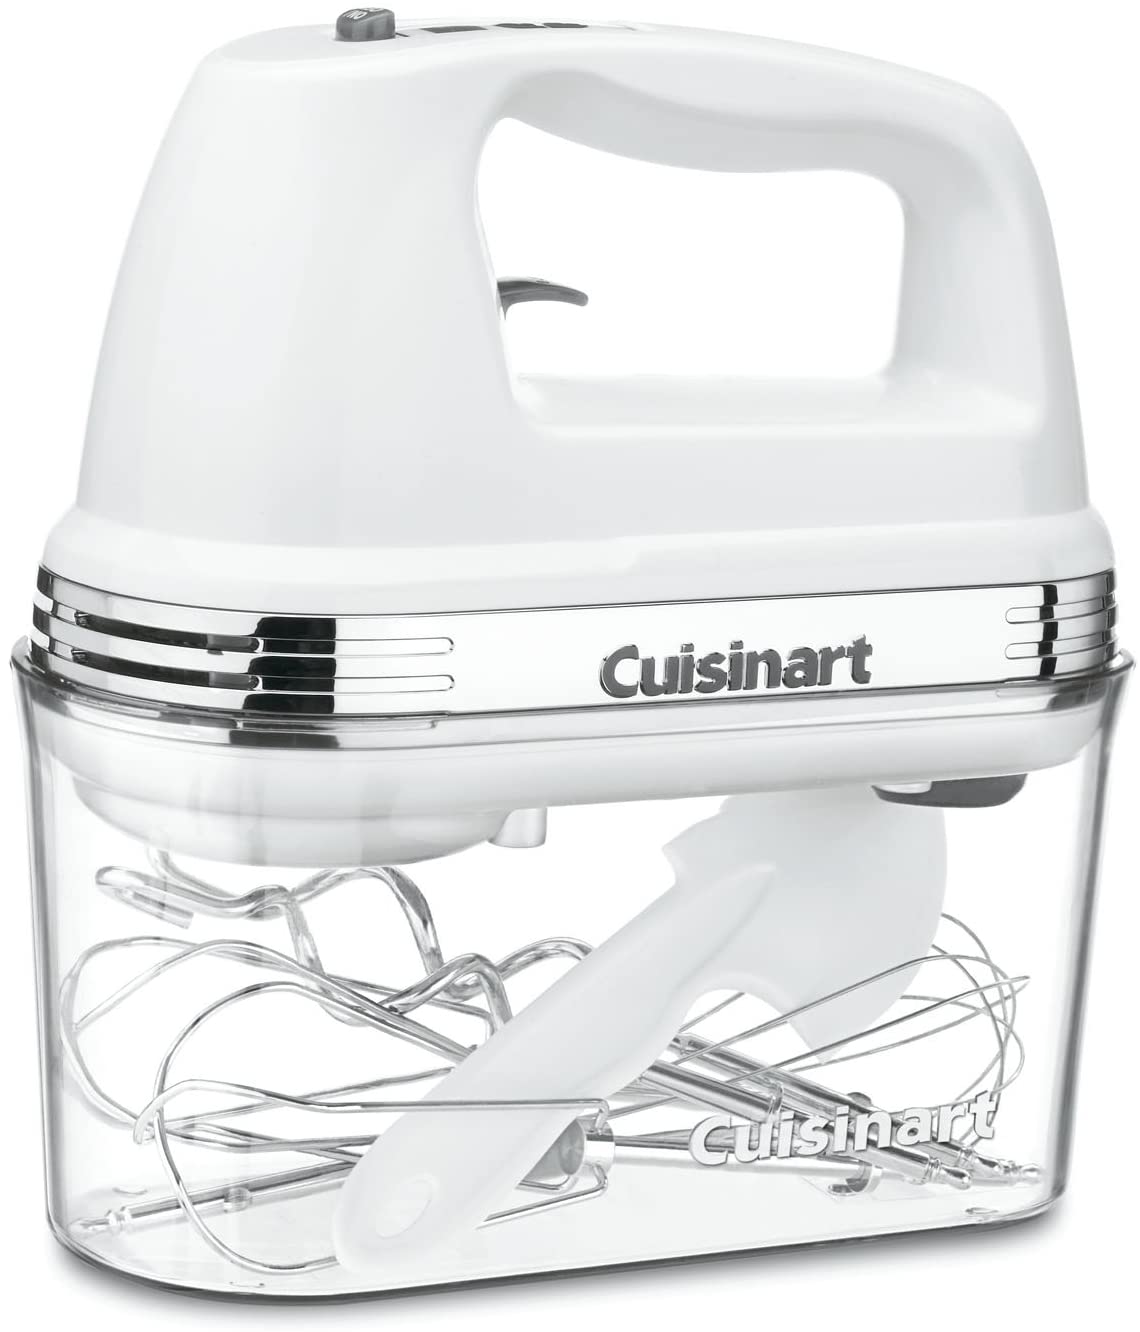 Cuisinart Power Advantage Plus 9-Speed Handheld Mixer with Storage Case – White